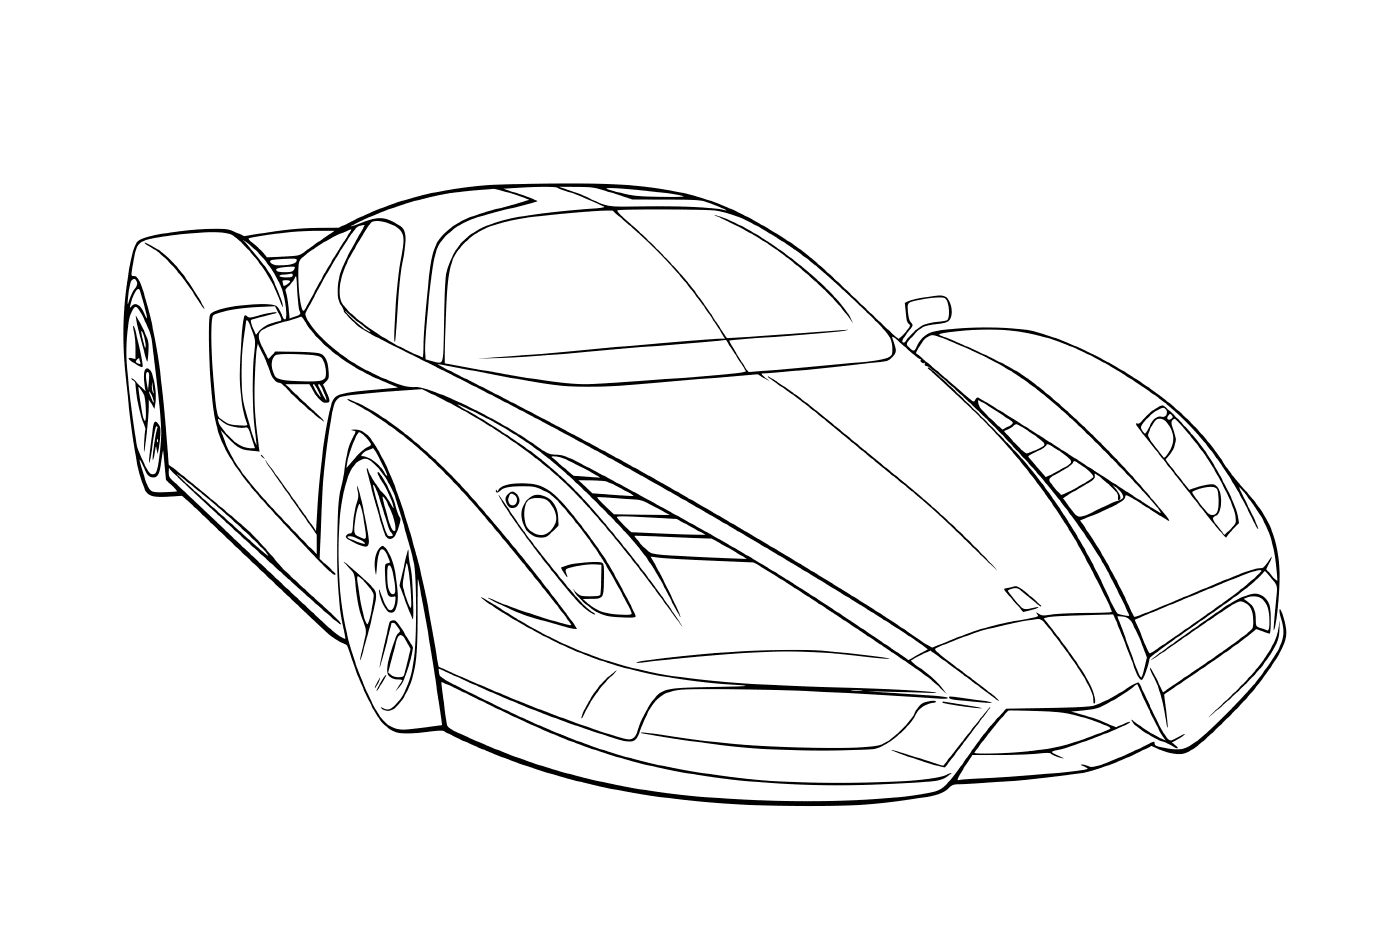 Ferrari Coloring Pages: 27 Printable Drawings